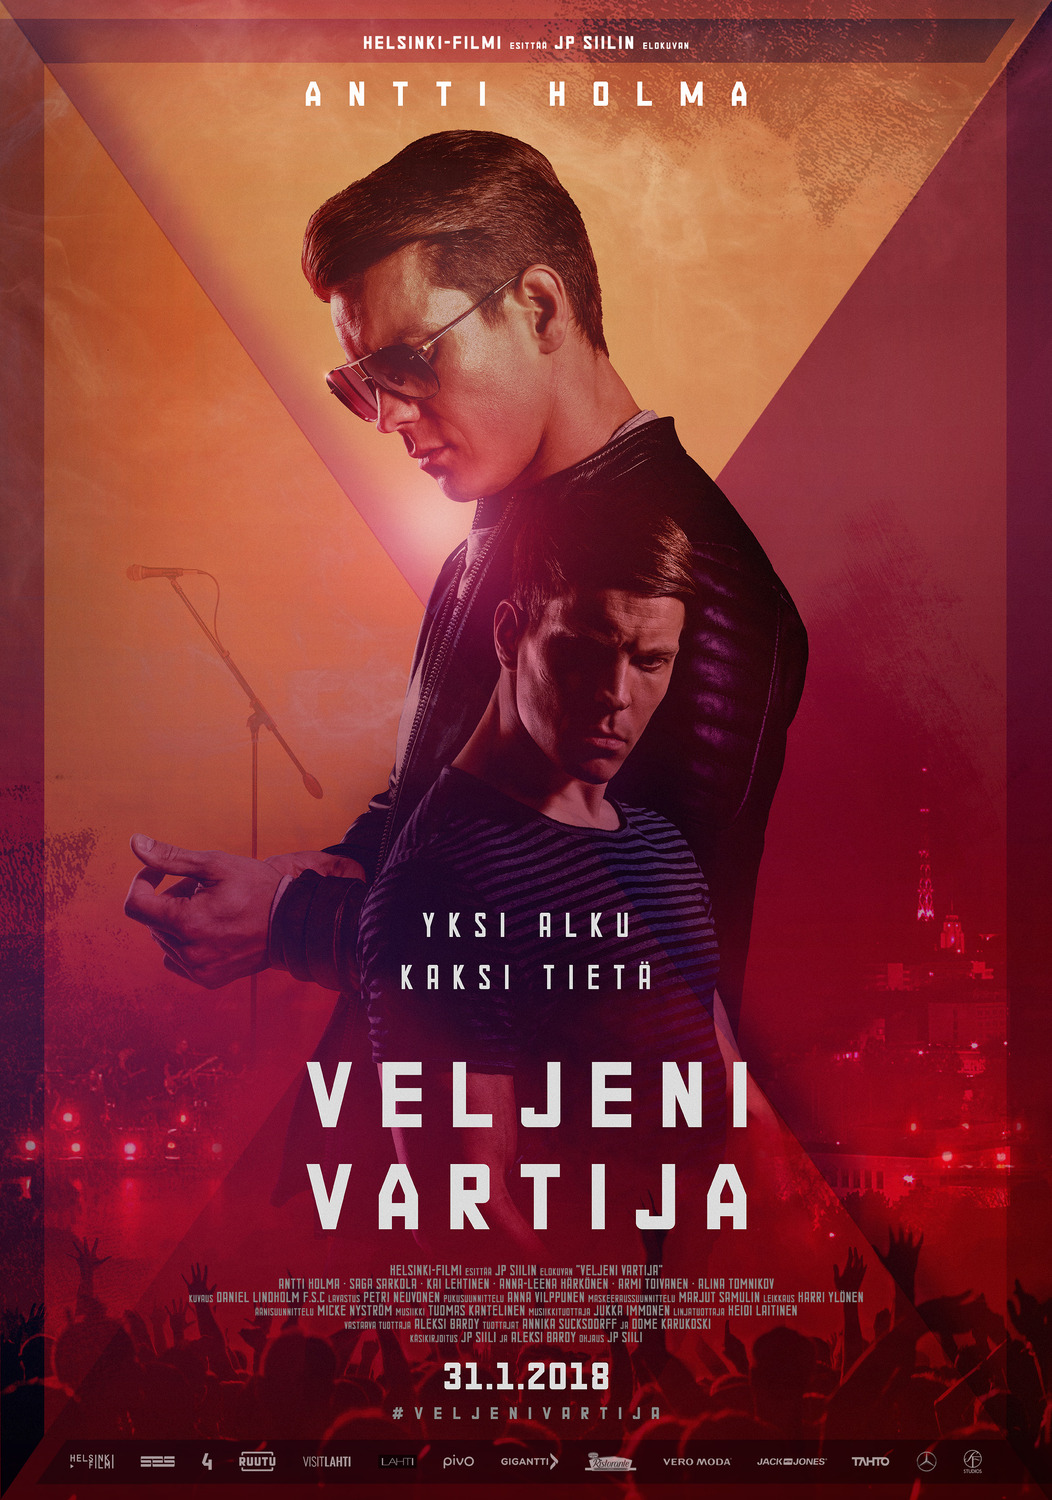 Extra Large Movie Poster Image for Veljeni vartija 